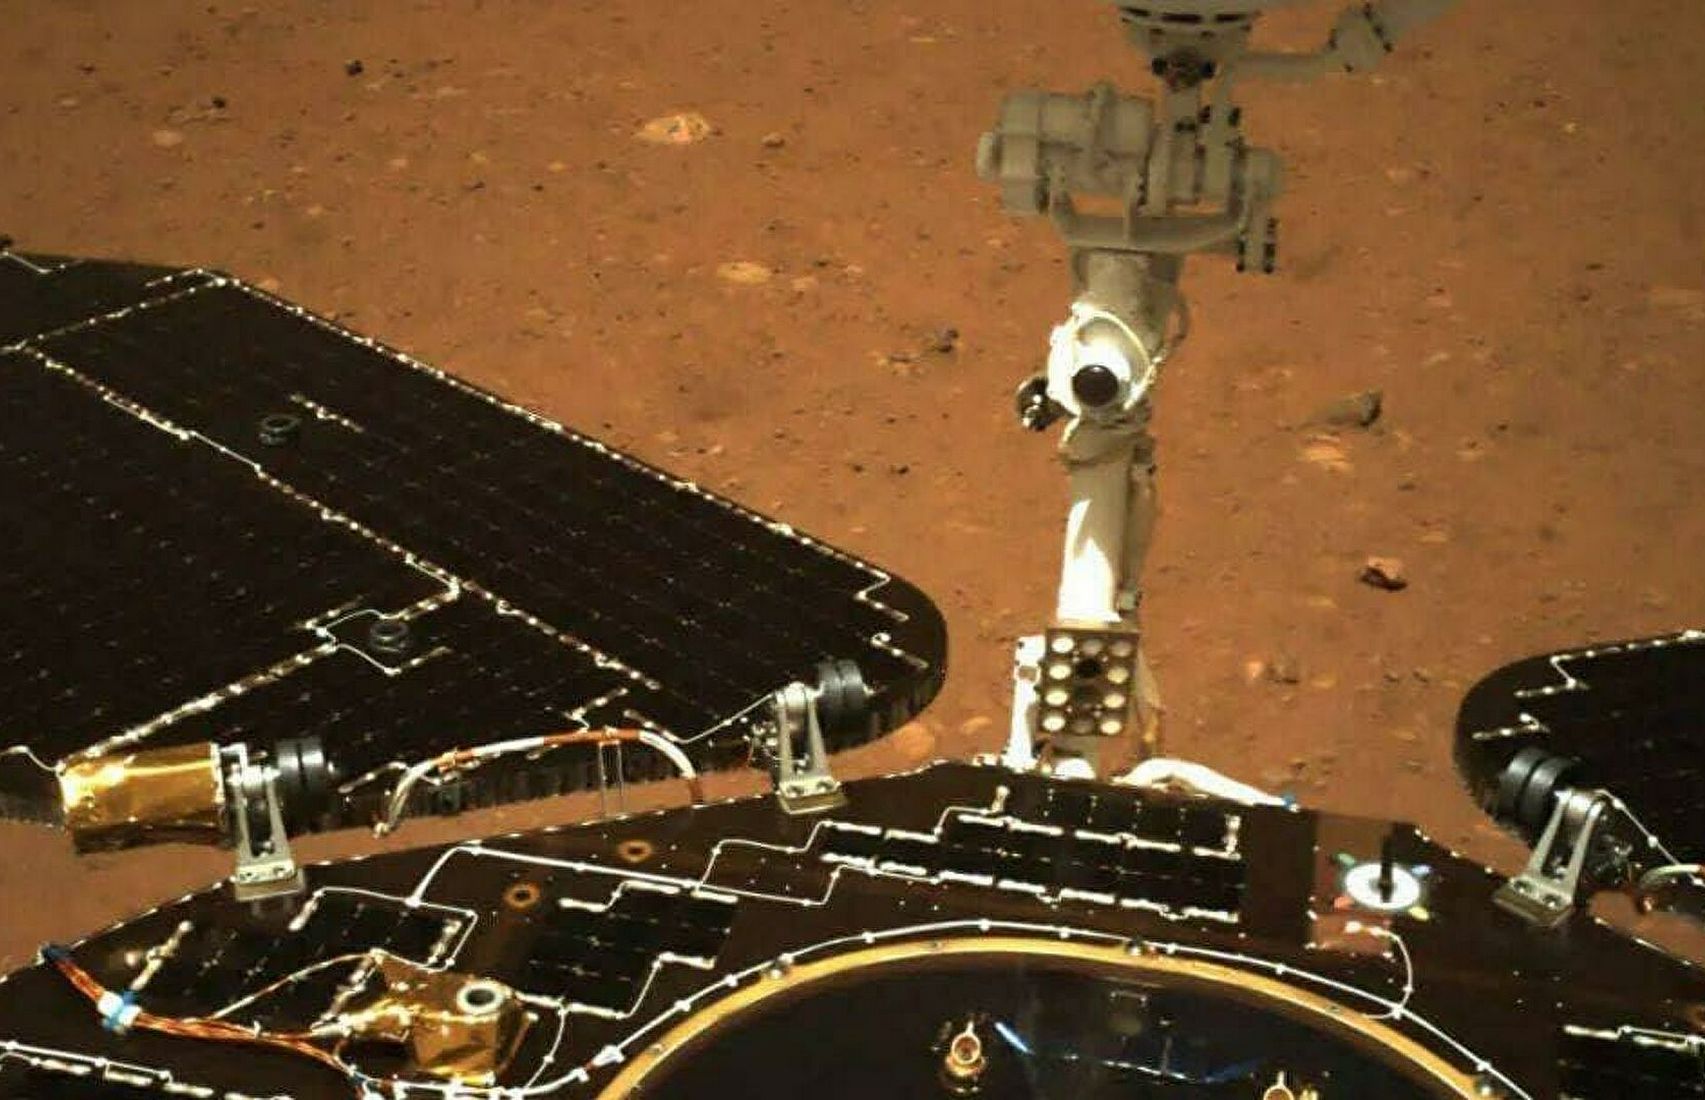 Китайский аппарат Чжужун сошёл на поверхность Марса (видео)